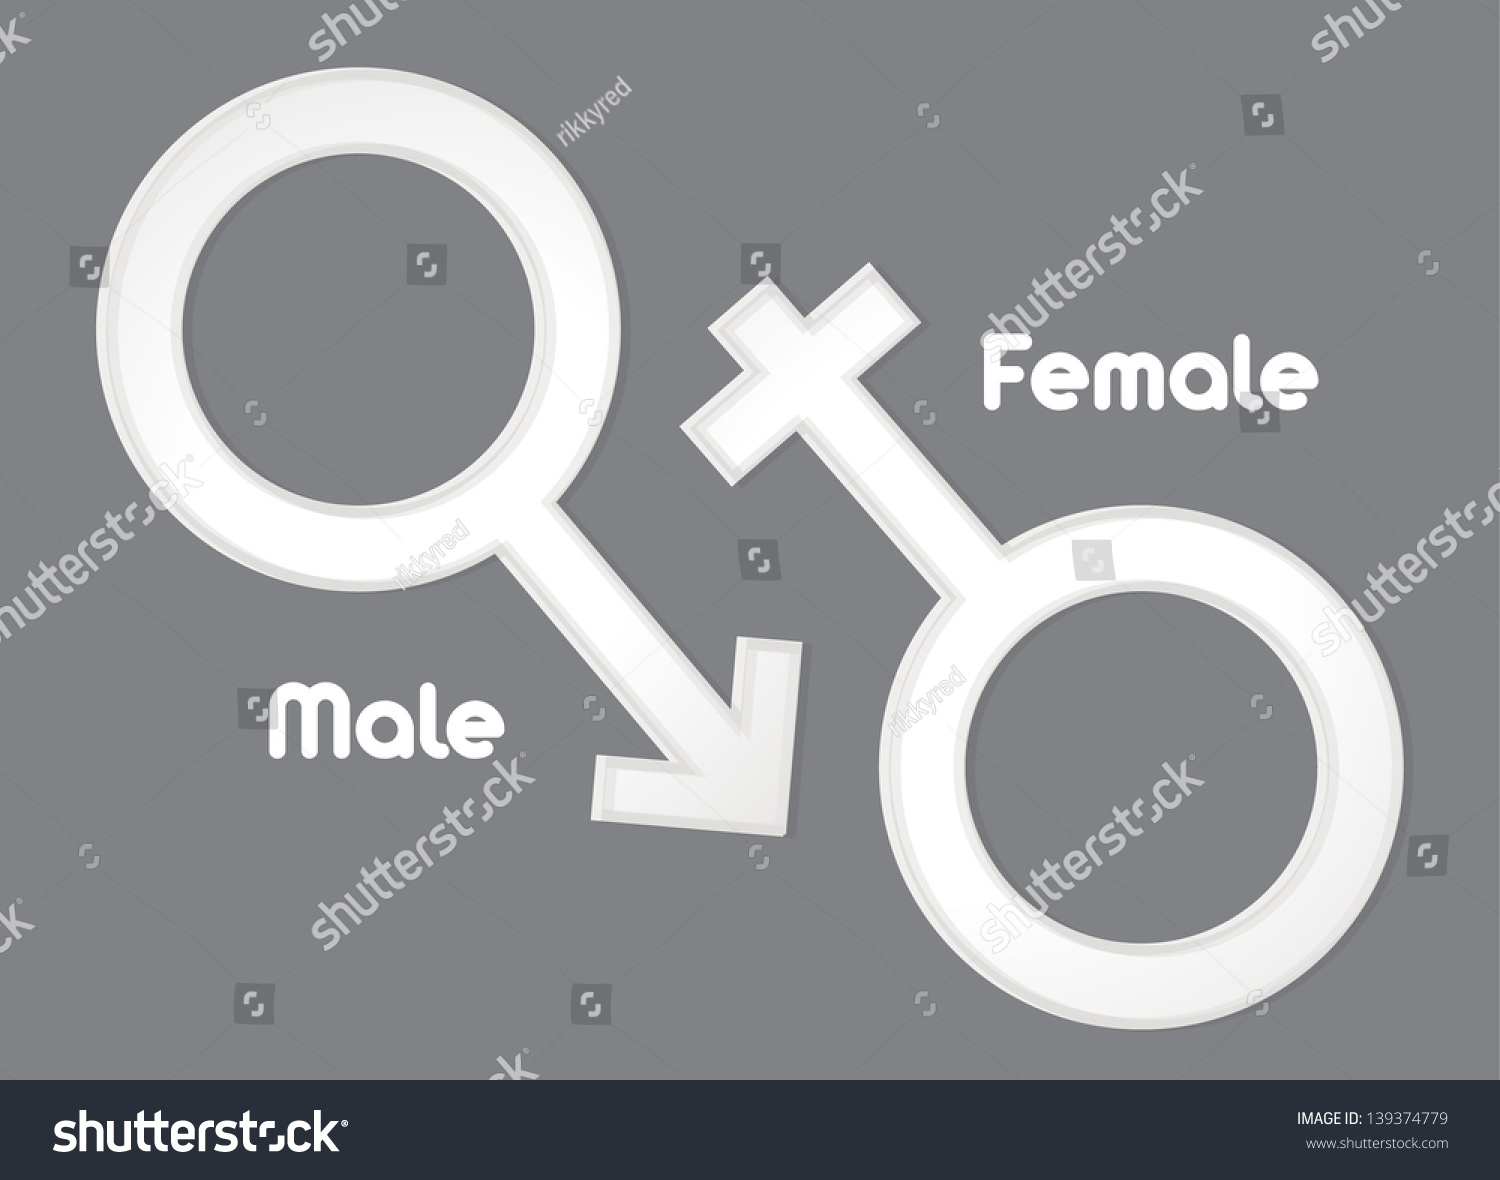 Male Female Sex Symbol Vector Stock Vector Royalty Free 139374779 Shutterstock 